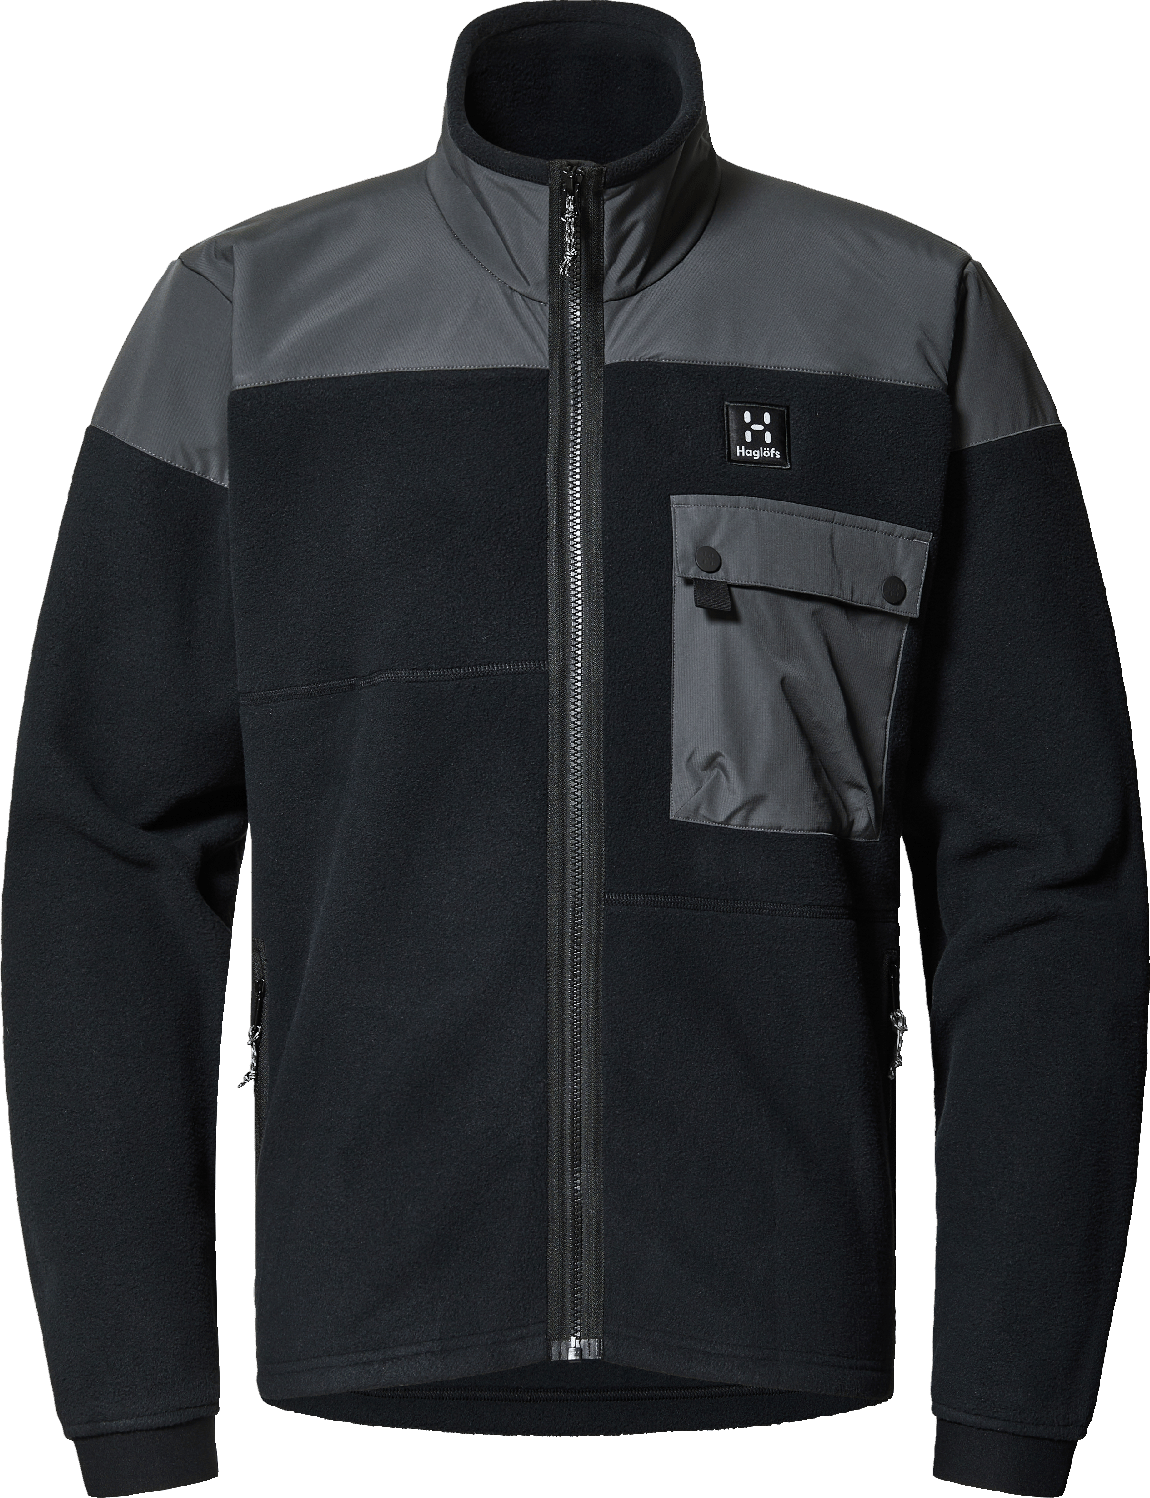 Men's Avesta Hybrid Jacket True Black